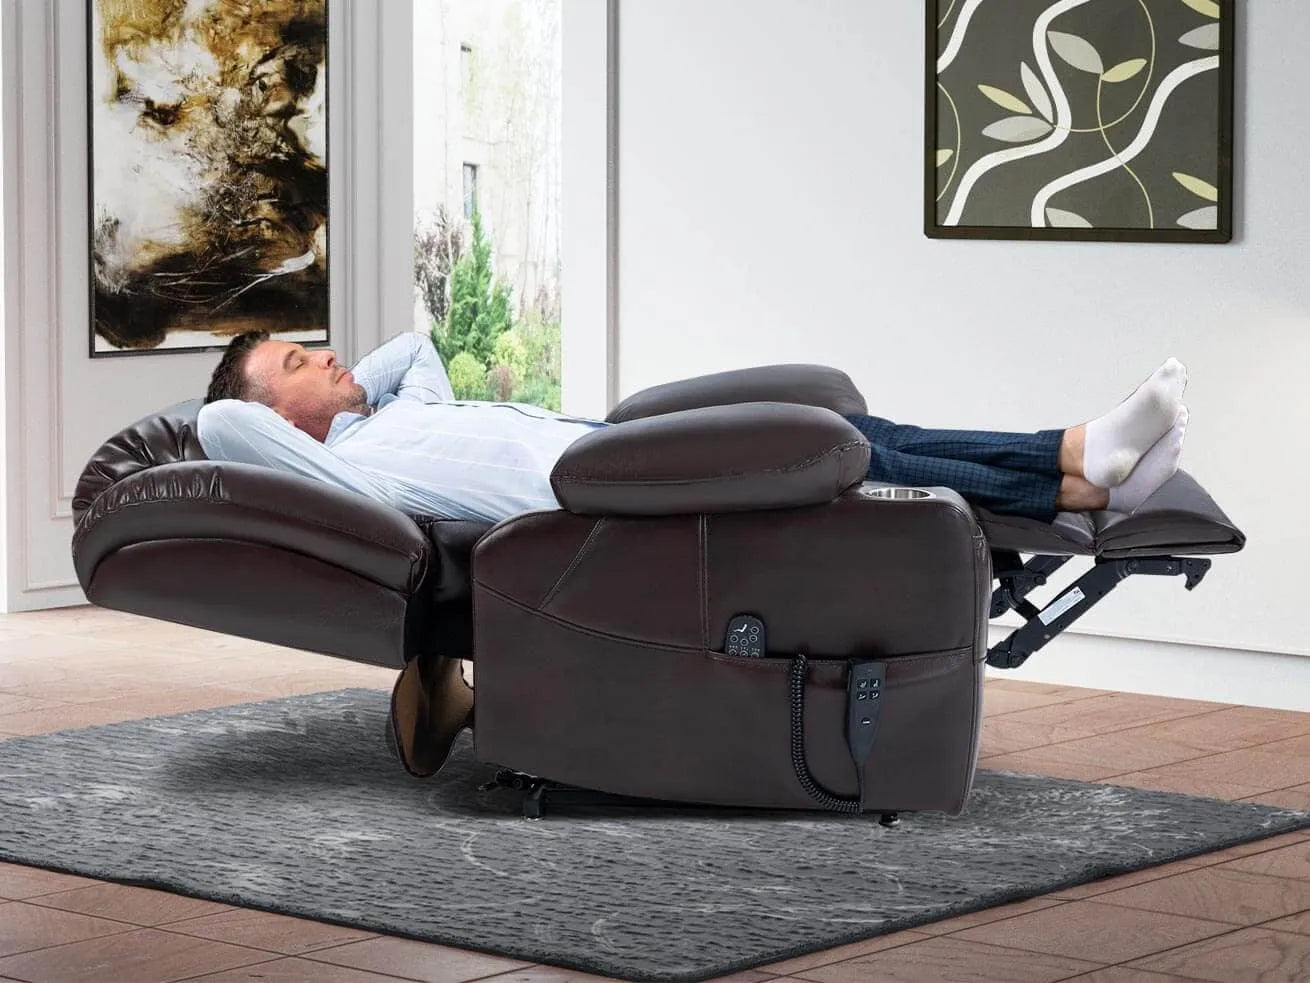 180 lift recliner chair for sleeping